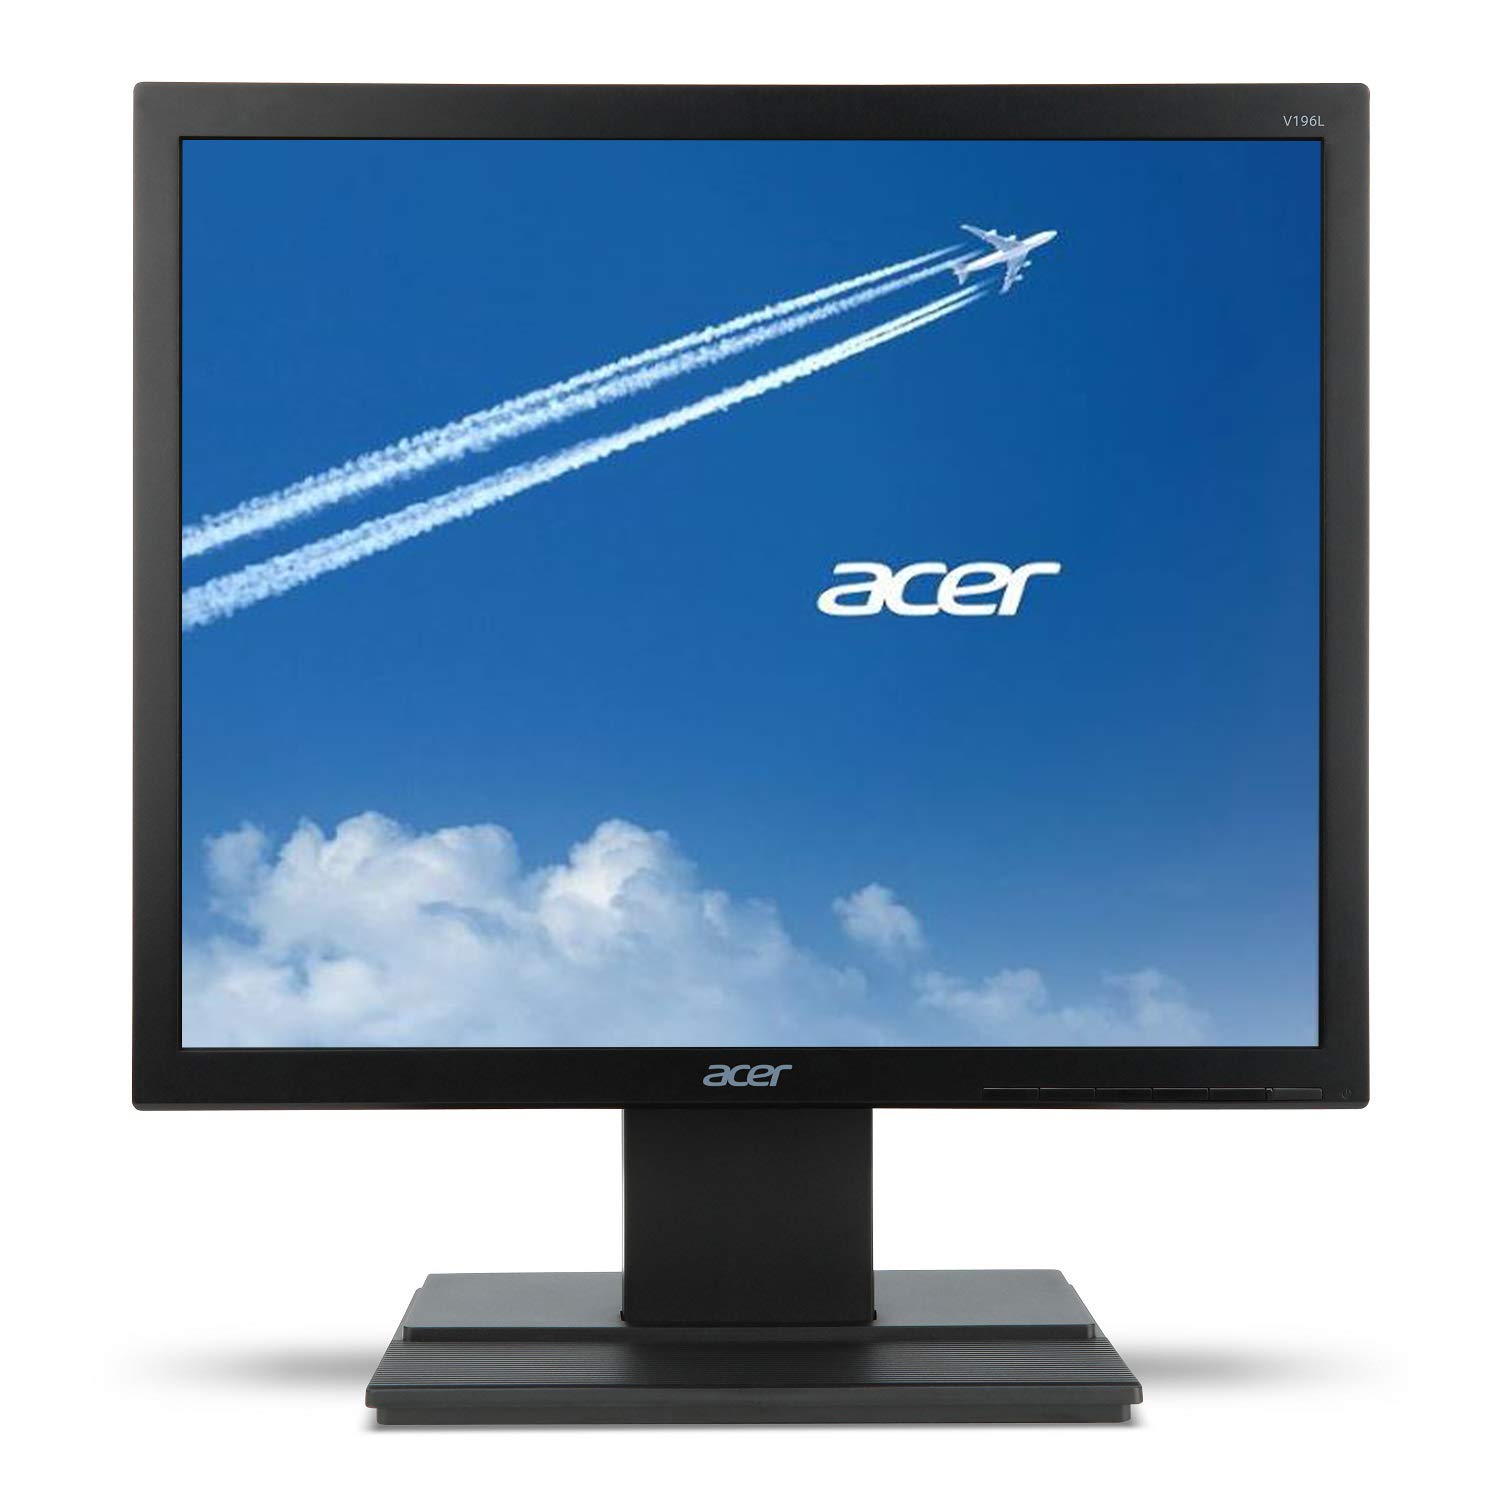 Acer Monitor IPS V196L Bb 19' HD (1280 x 1024) (porta V...